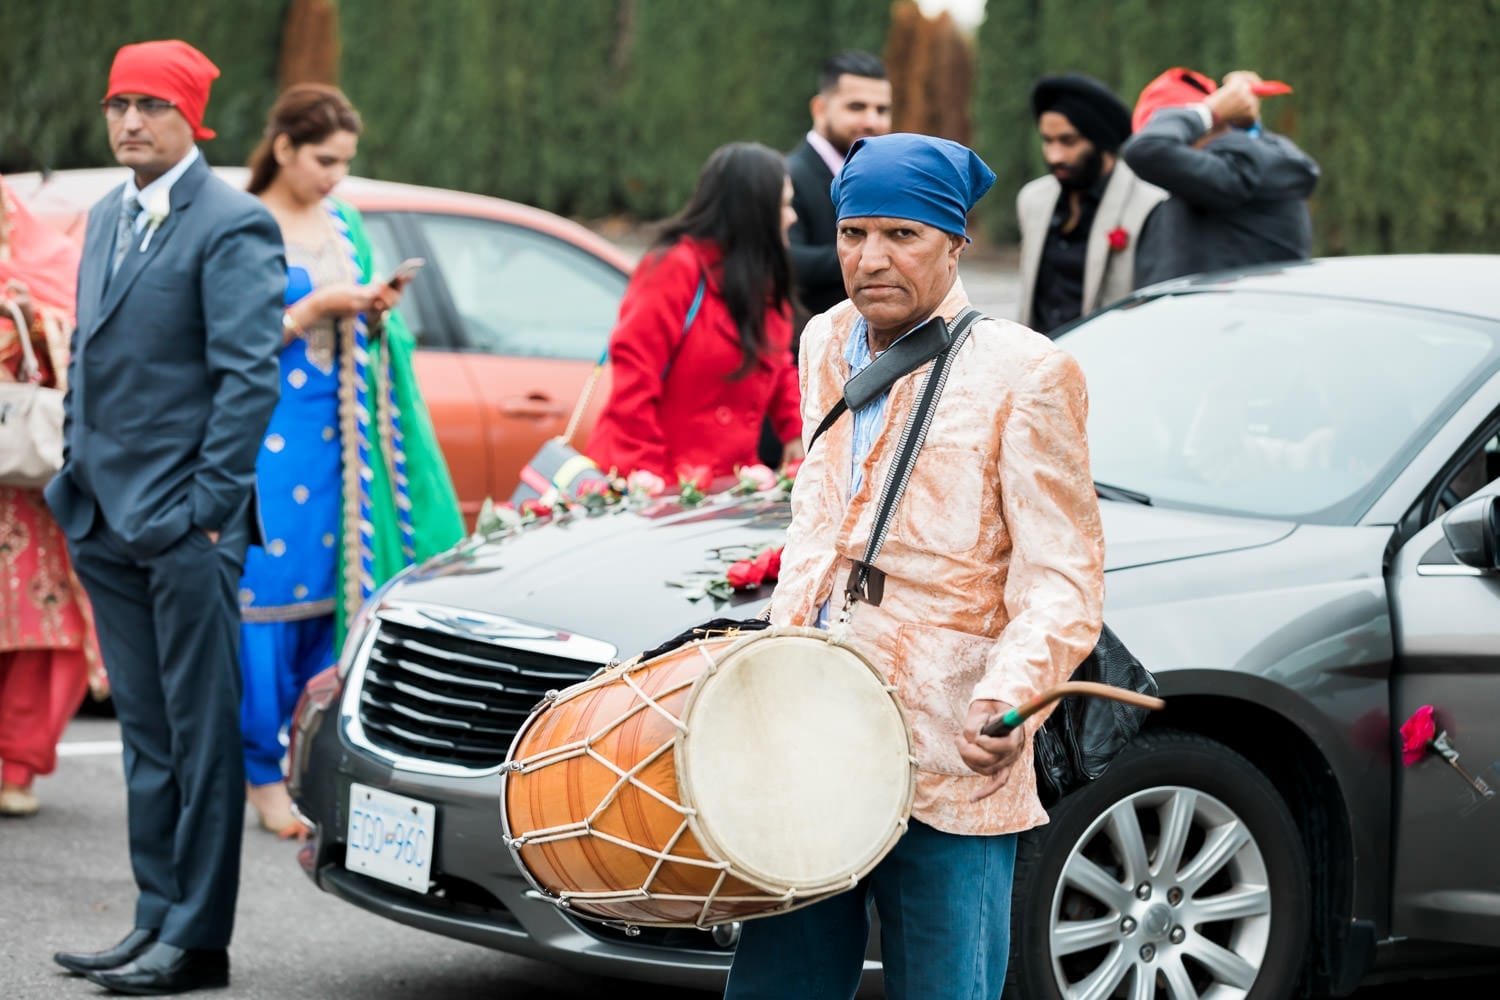 Indian wedding drummer performance | Indian wedding photography Vancouver